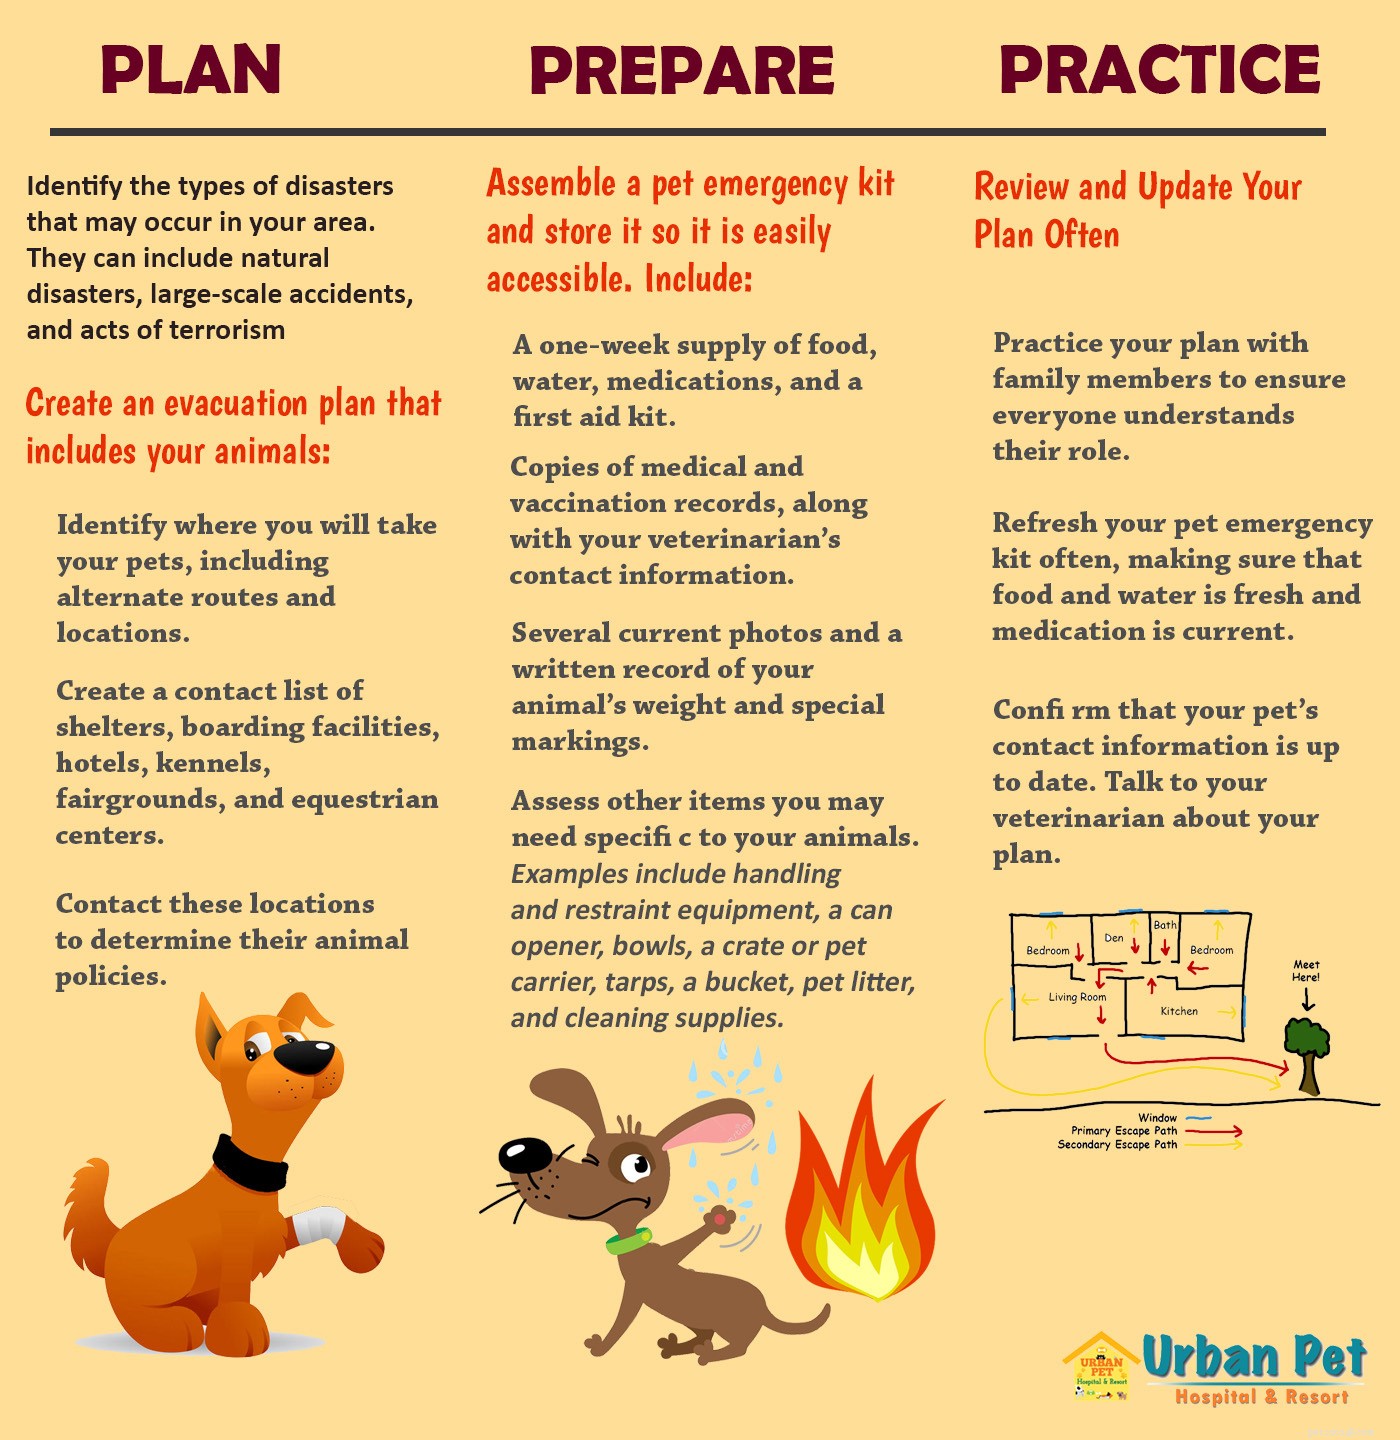 15 juli is de Pet Fire Safety Day